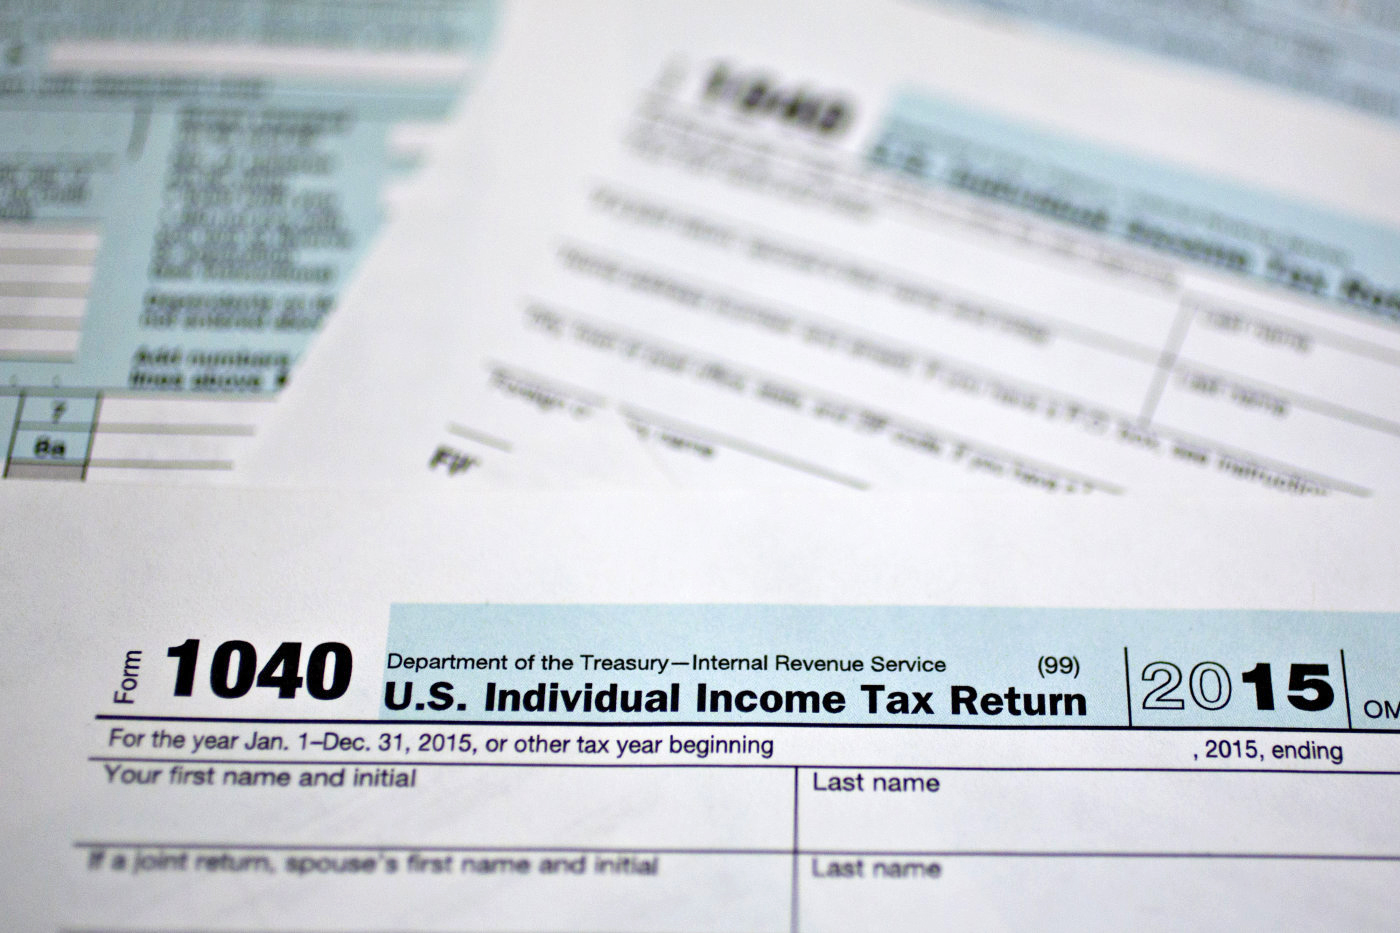 E taxes. Department of the Treasury Internal revenue service. IRS.